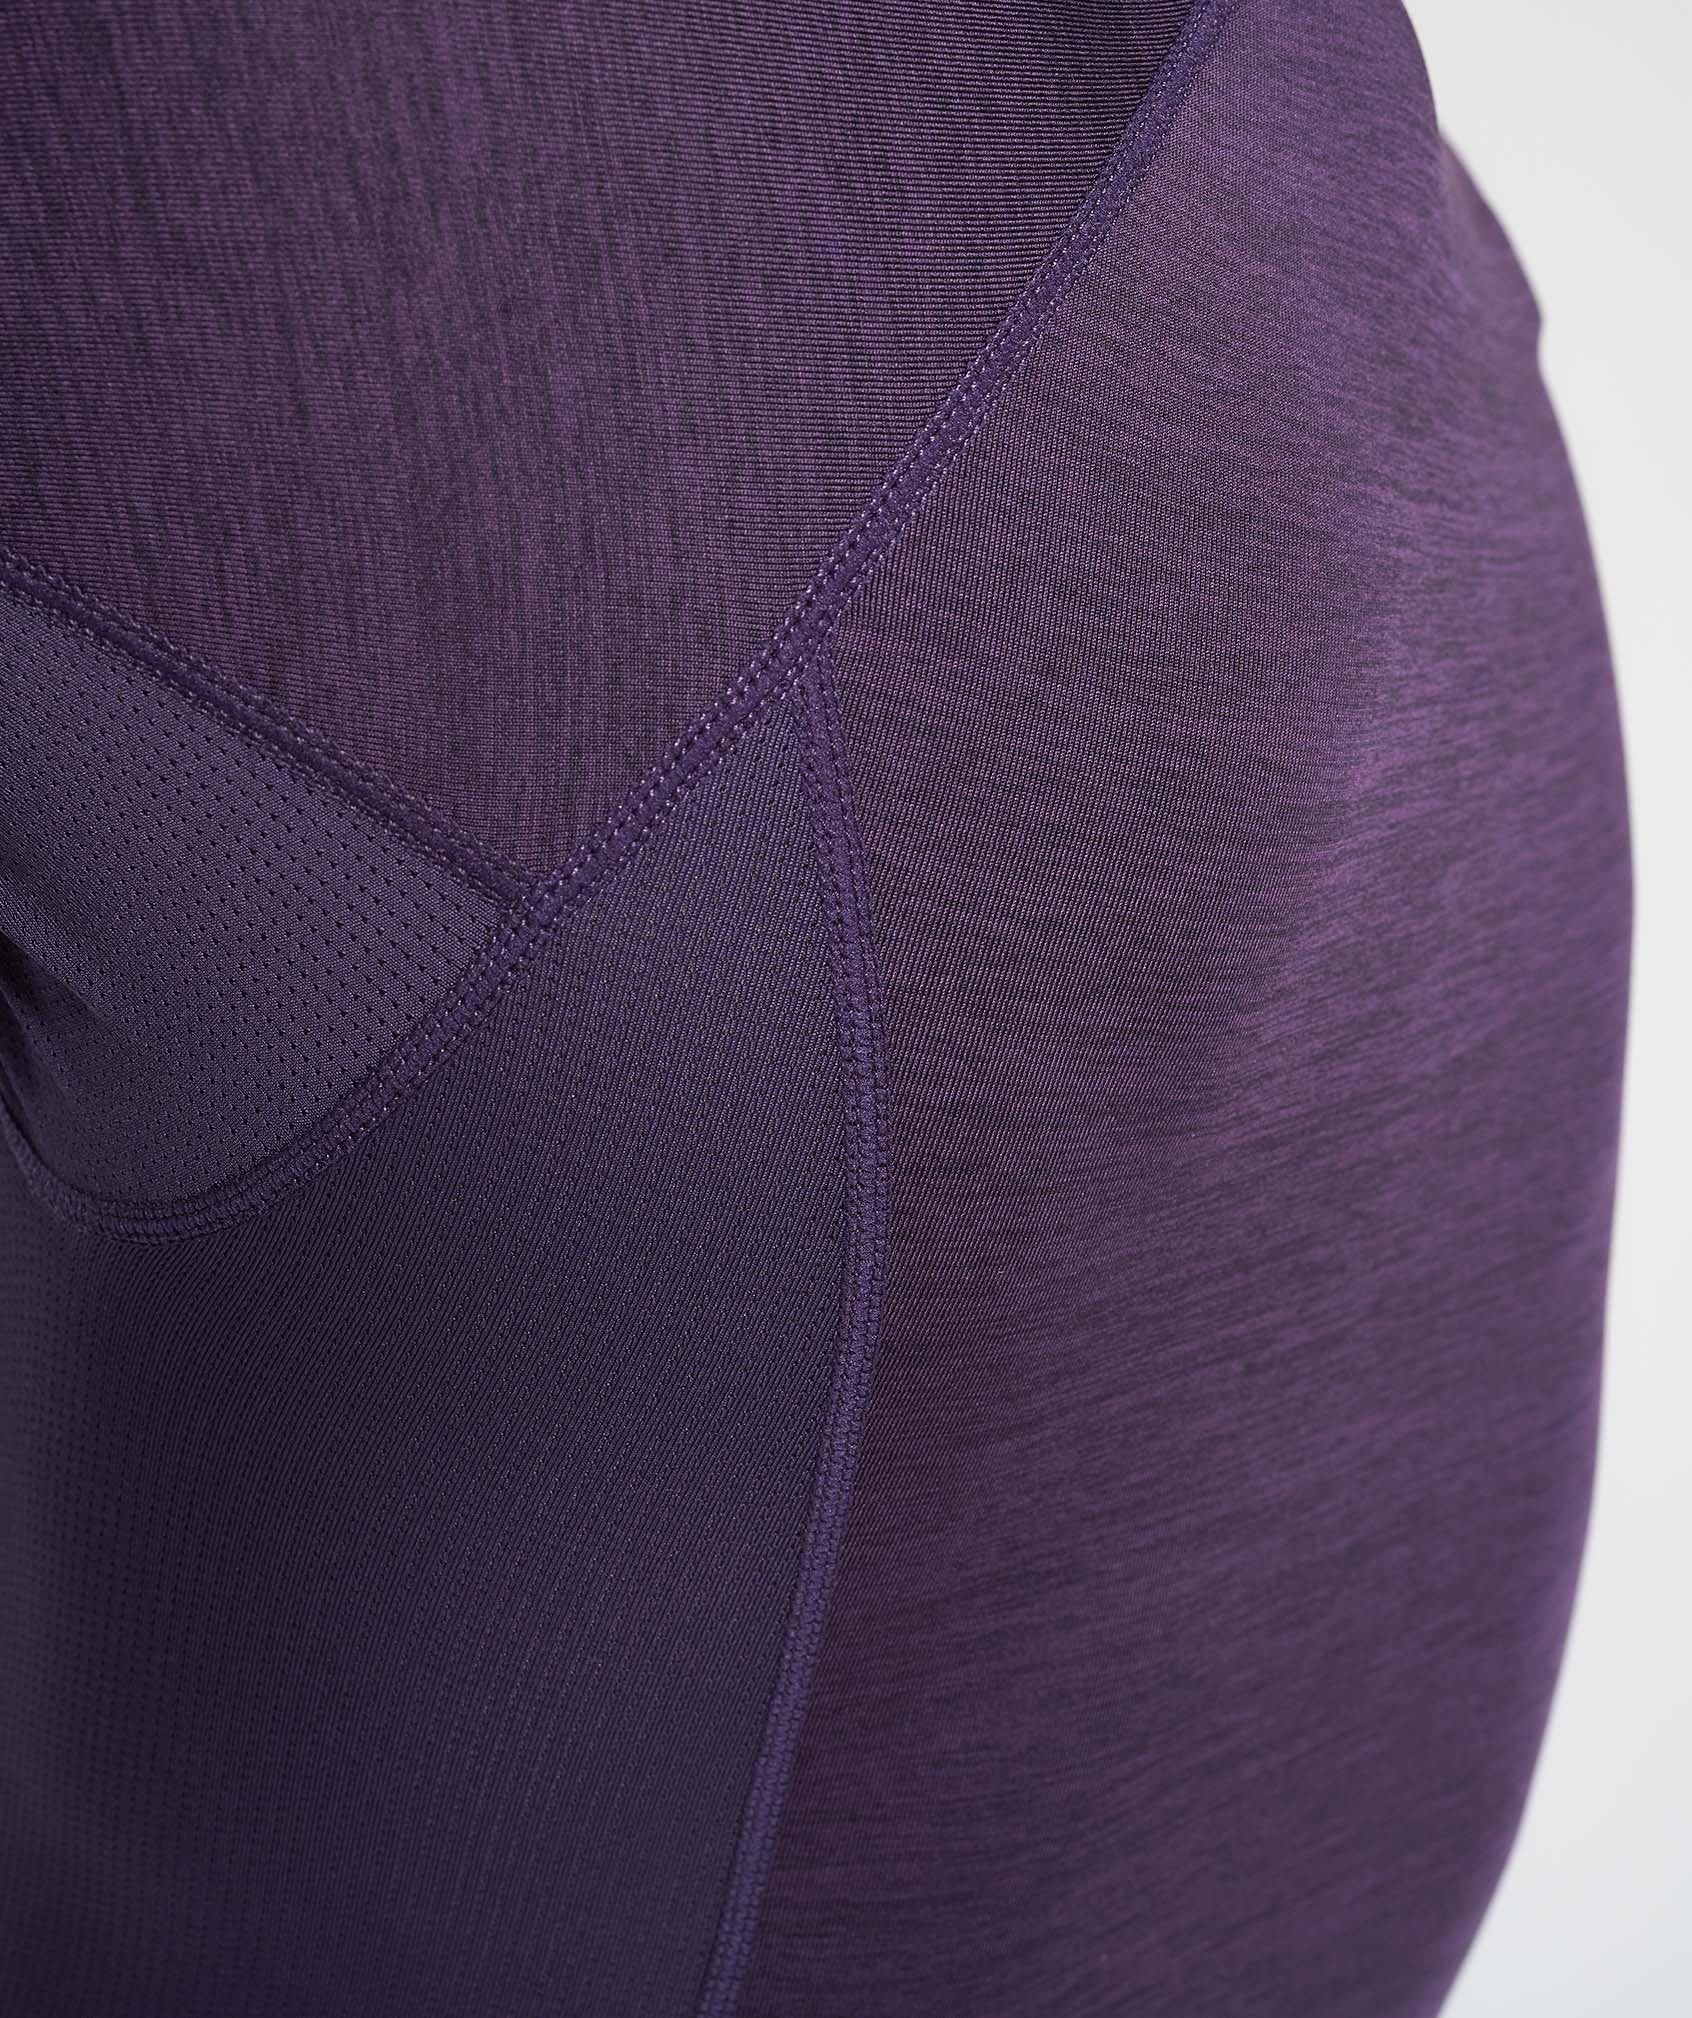 Element Baselayer Short Sleeve Top in Nightshade Purple Marl - view 6